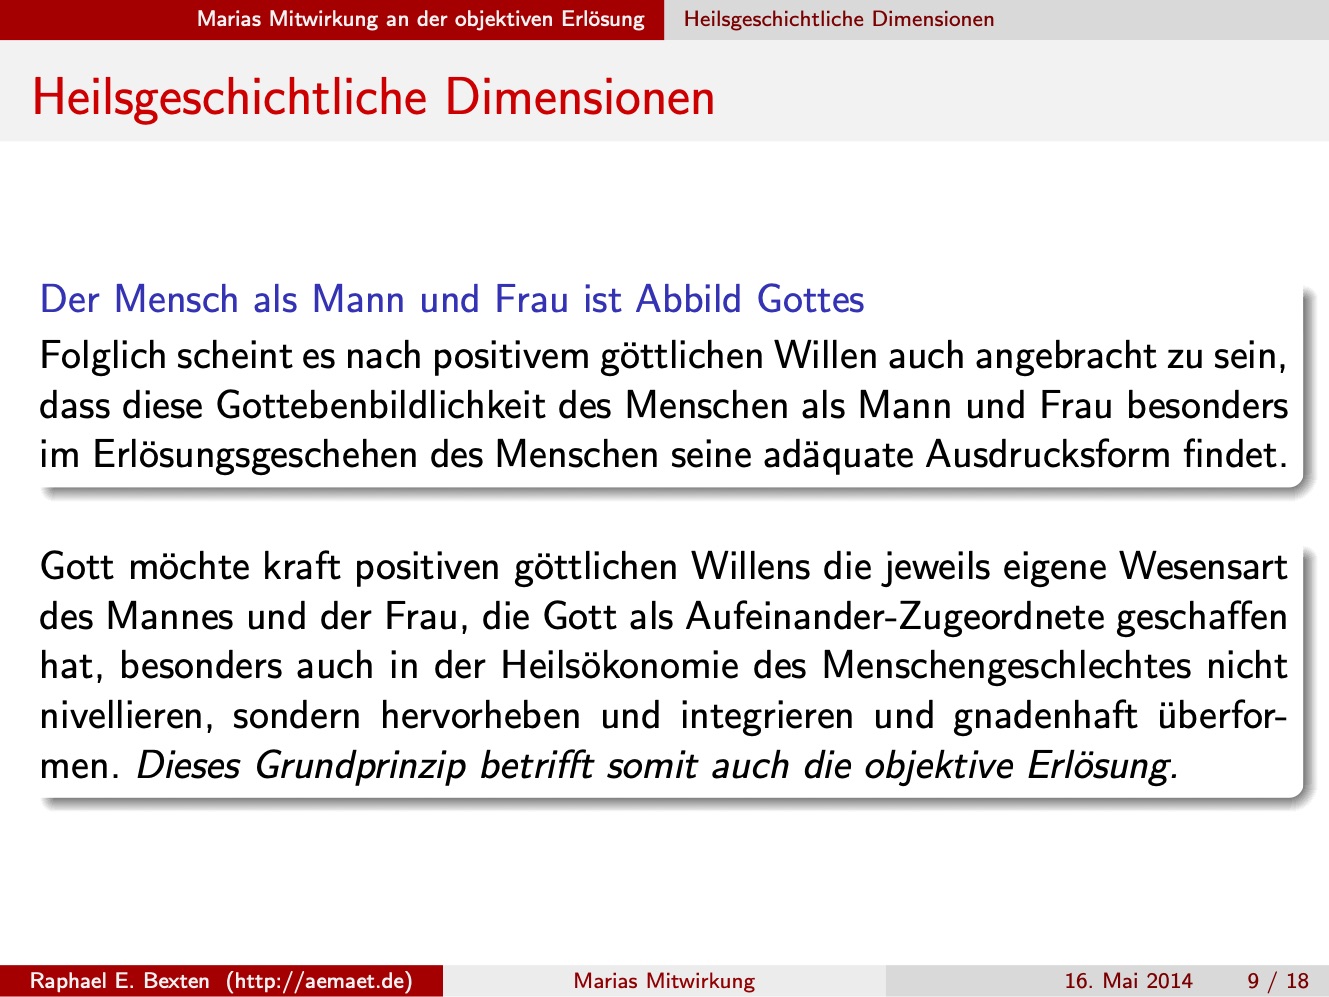 Marias_Mitwirkung_Bexten Kopie 3.pdf-09